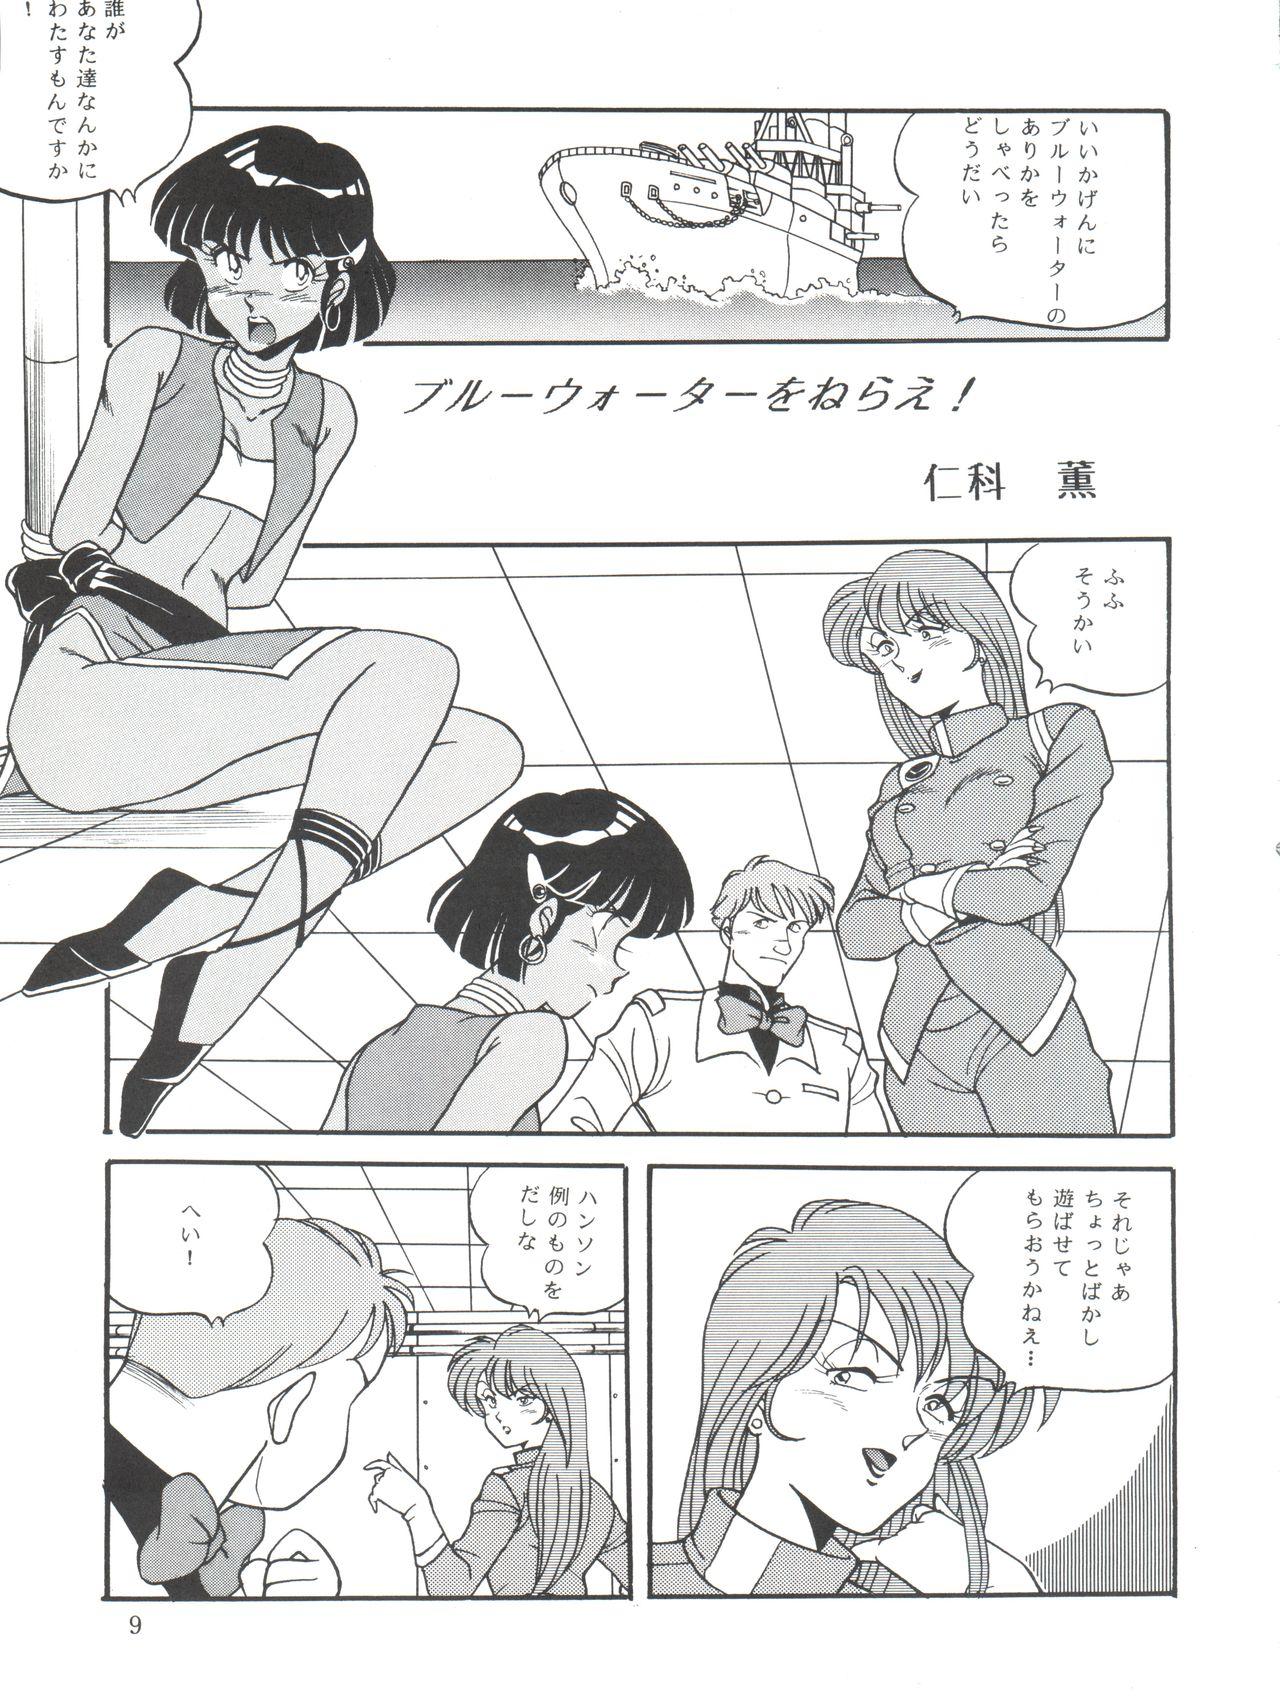 Lesbiansex Vocalization - Fushigi no umi no nadia Group - Page 9